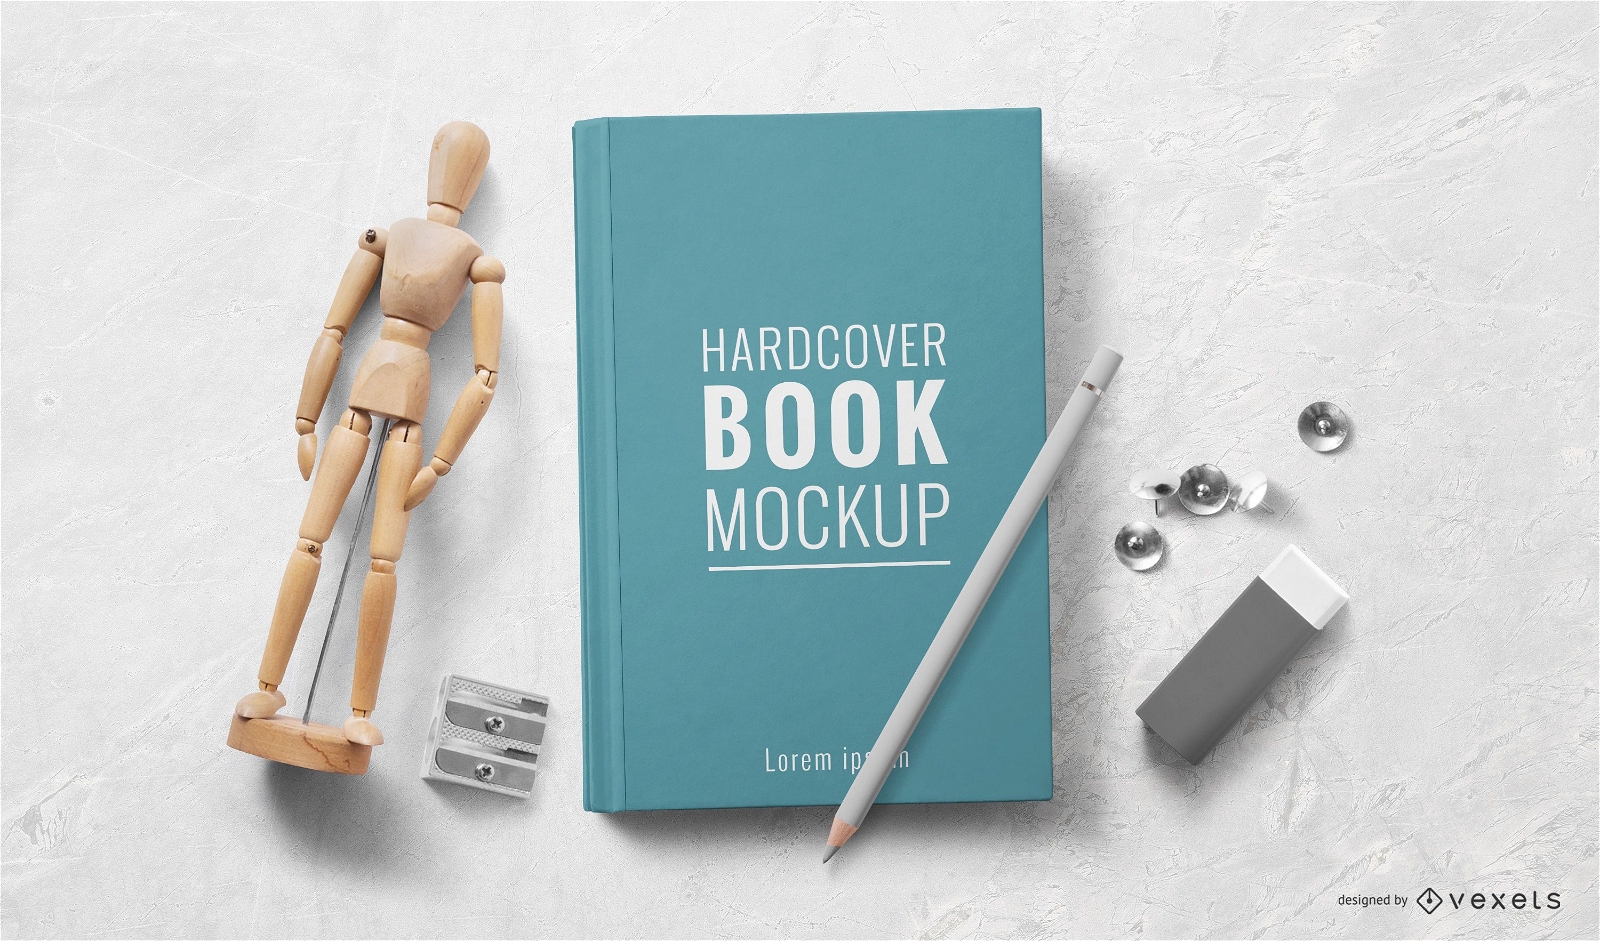 Hardcover Book Object Mockup Design